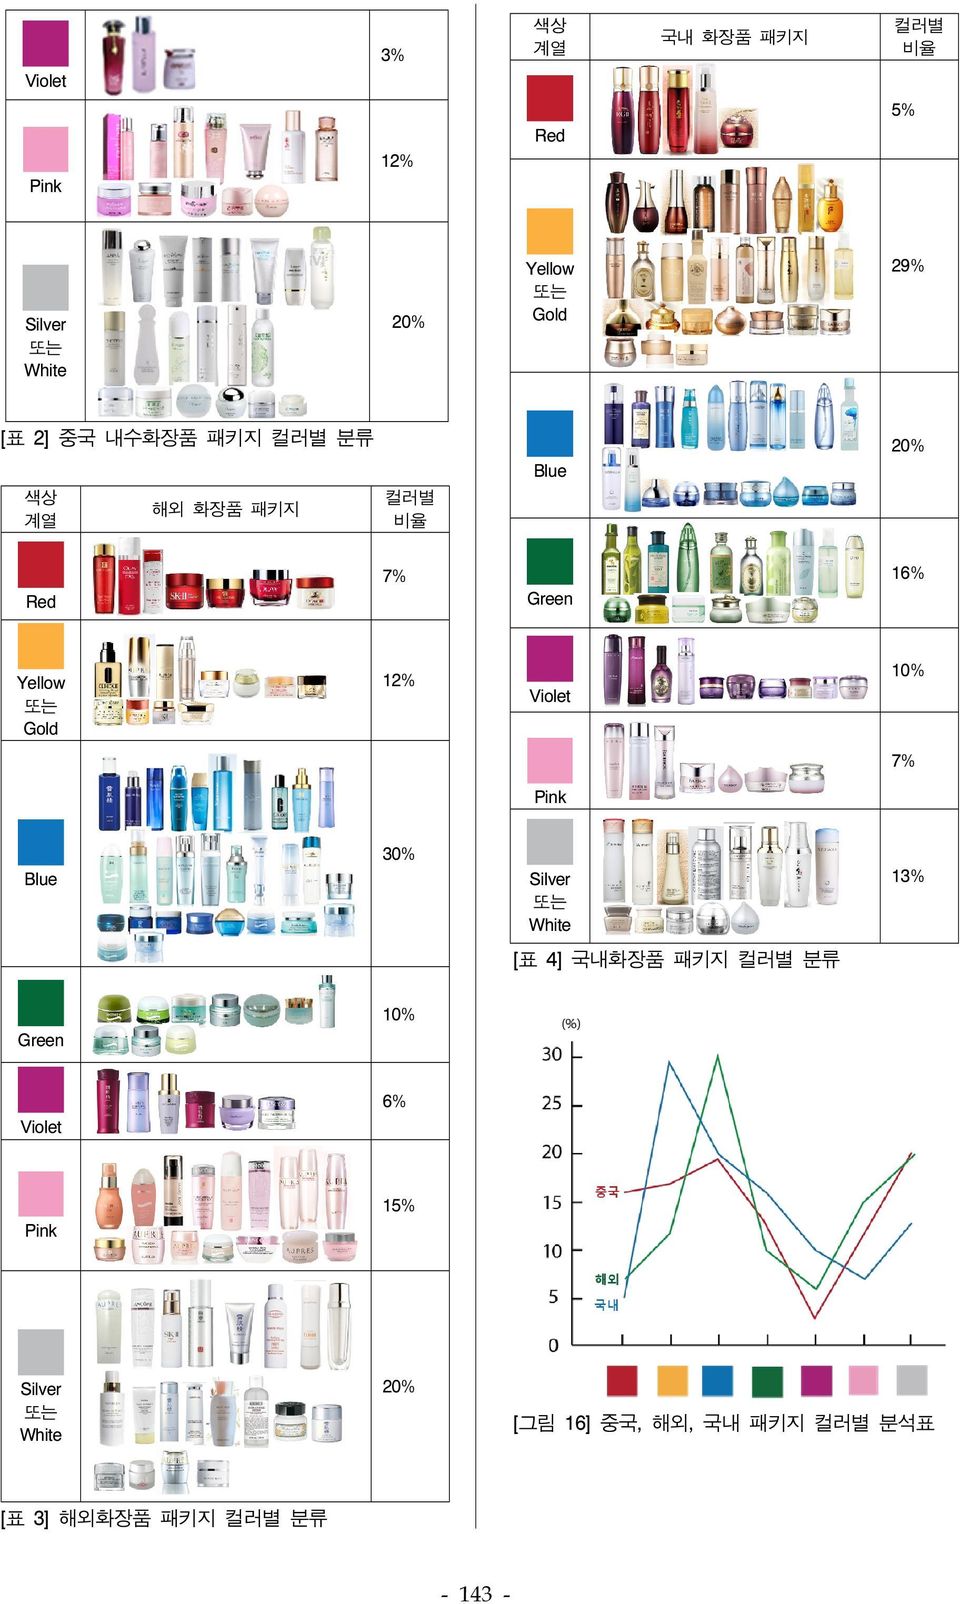 Violet 10% 7% Pink Blue 30% Silver 또는 White 13% [표 4] 국내화장품 패키지 컬러별 분류 Green 10% Violet 6%